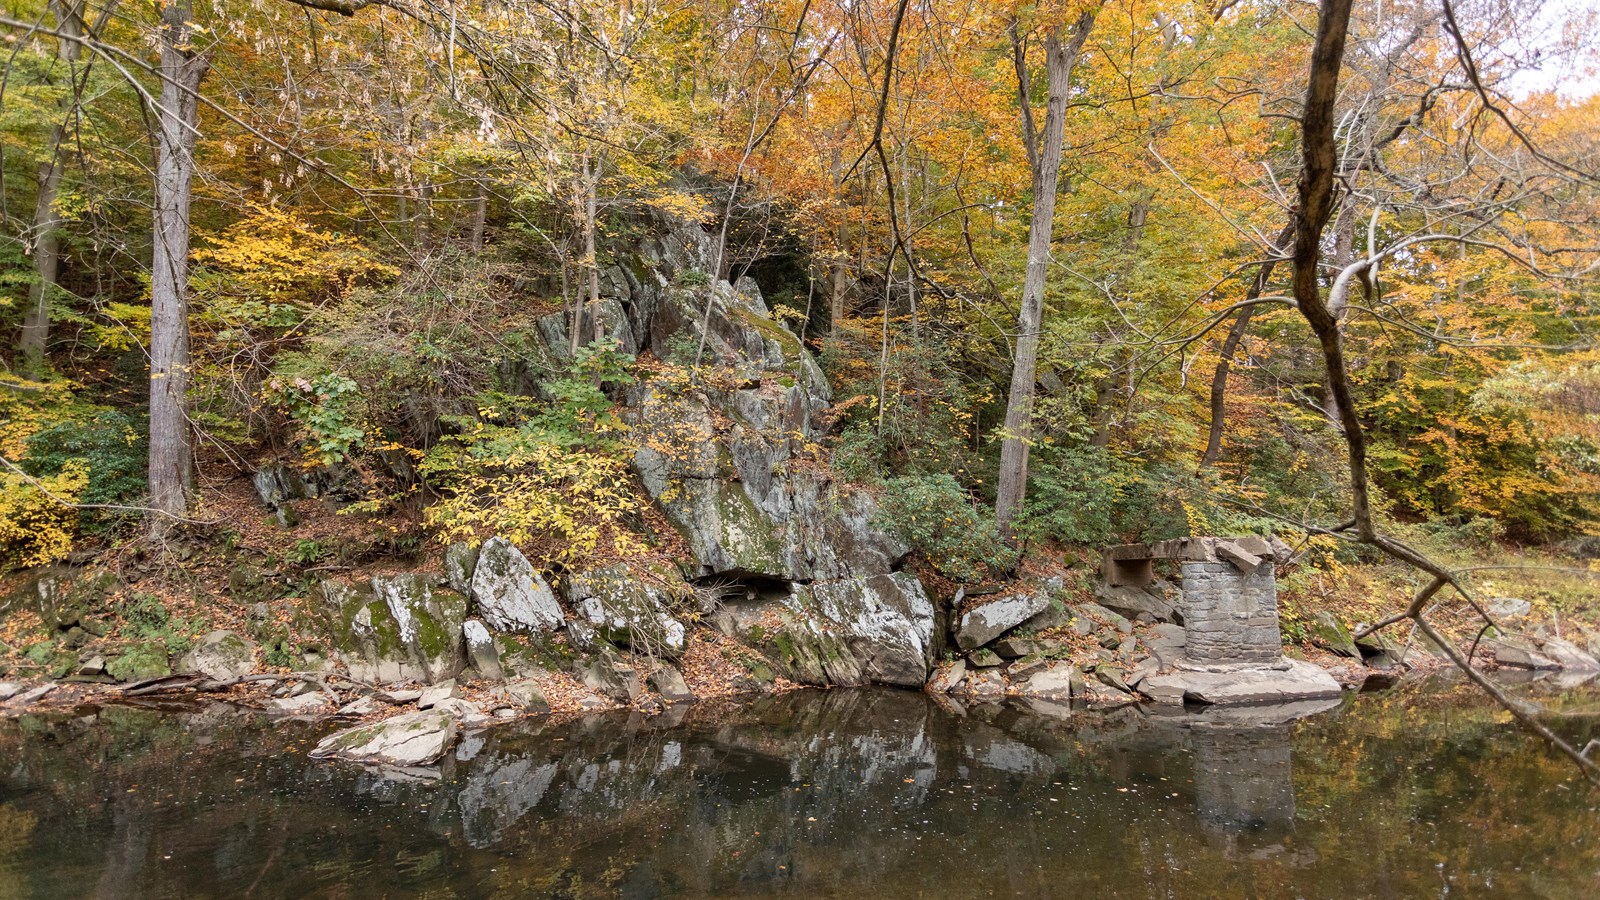 A rocky embankment next to a river. 